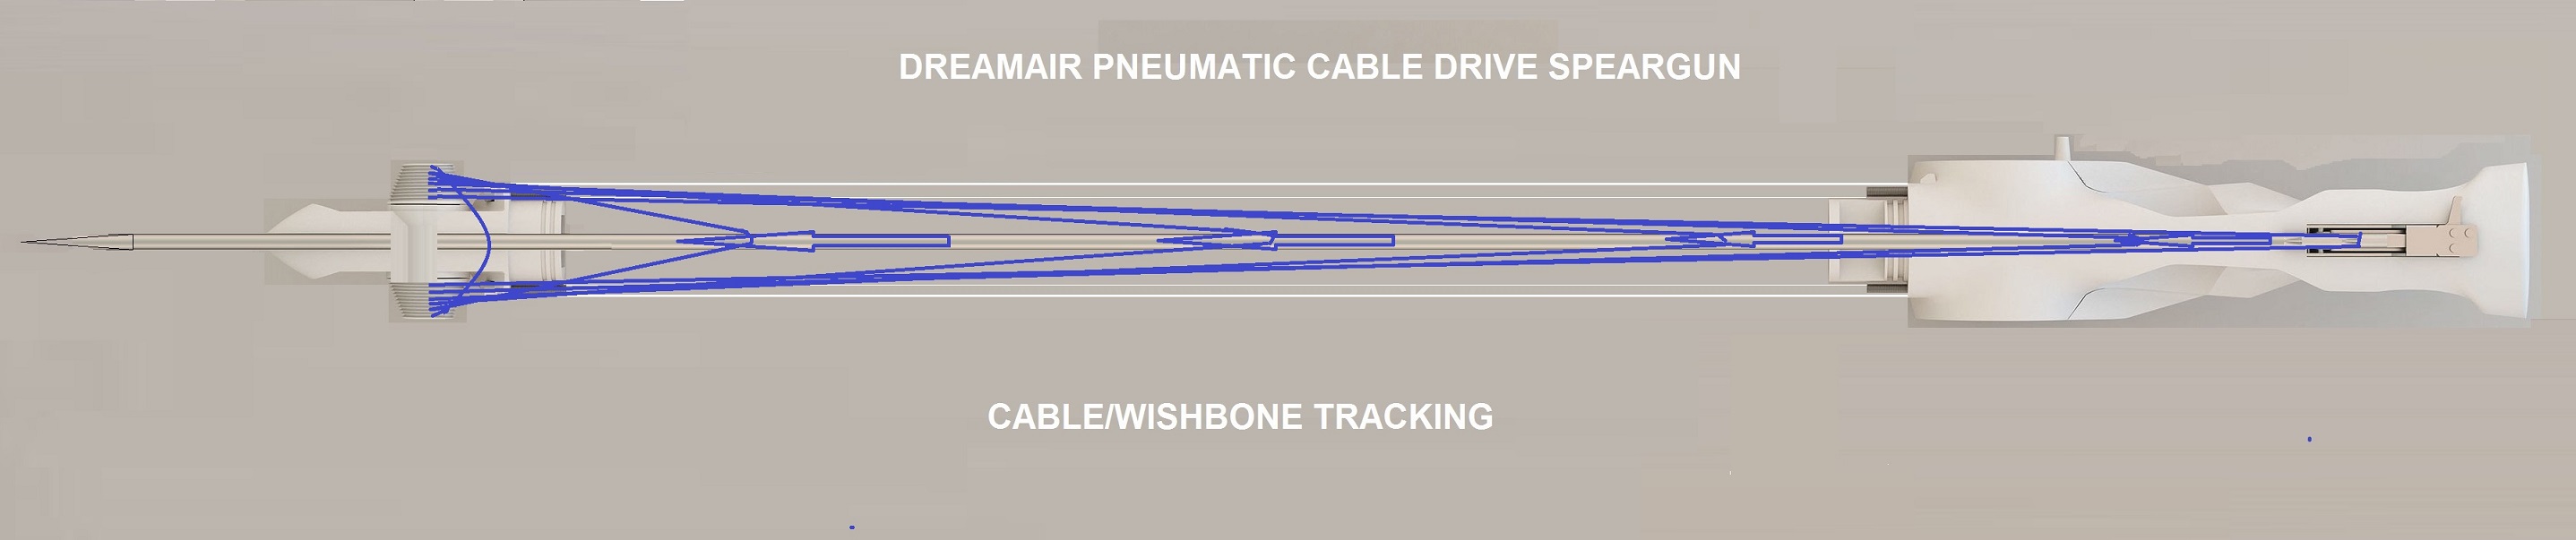 Dreamair wishbone track template BR.jpg